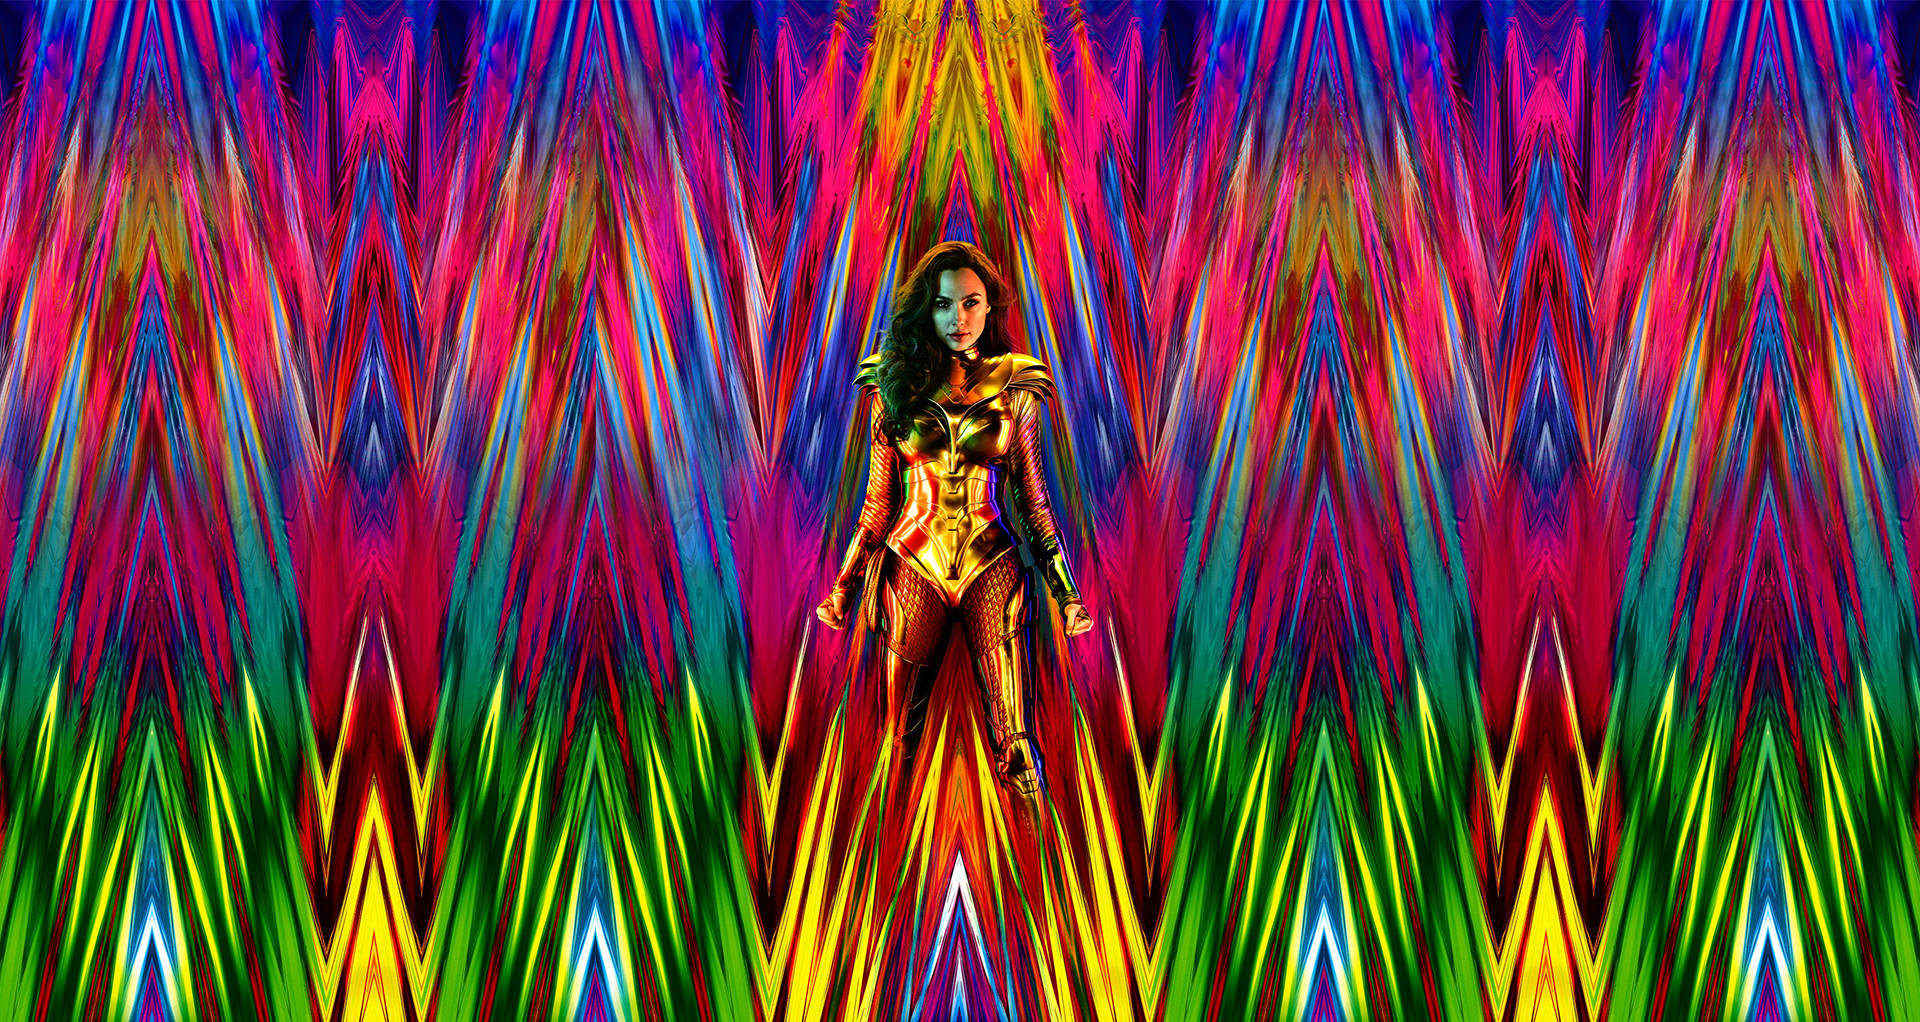 Dc Wonder Woman 1984 Wallpapers